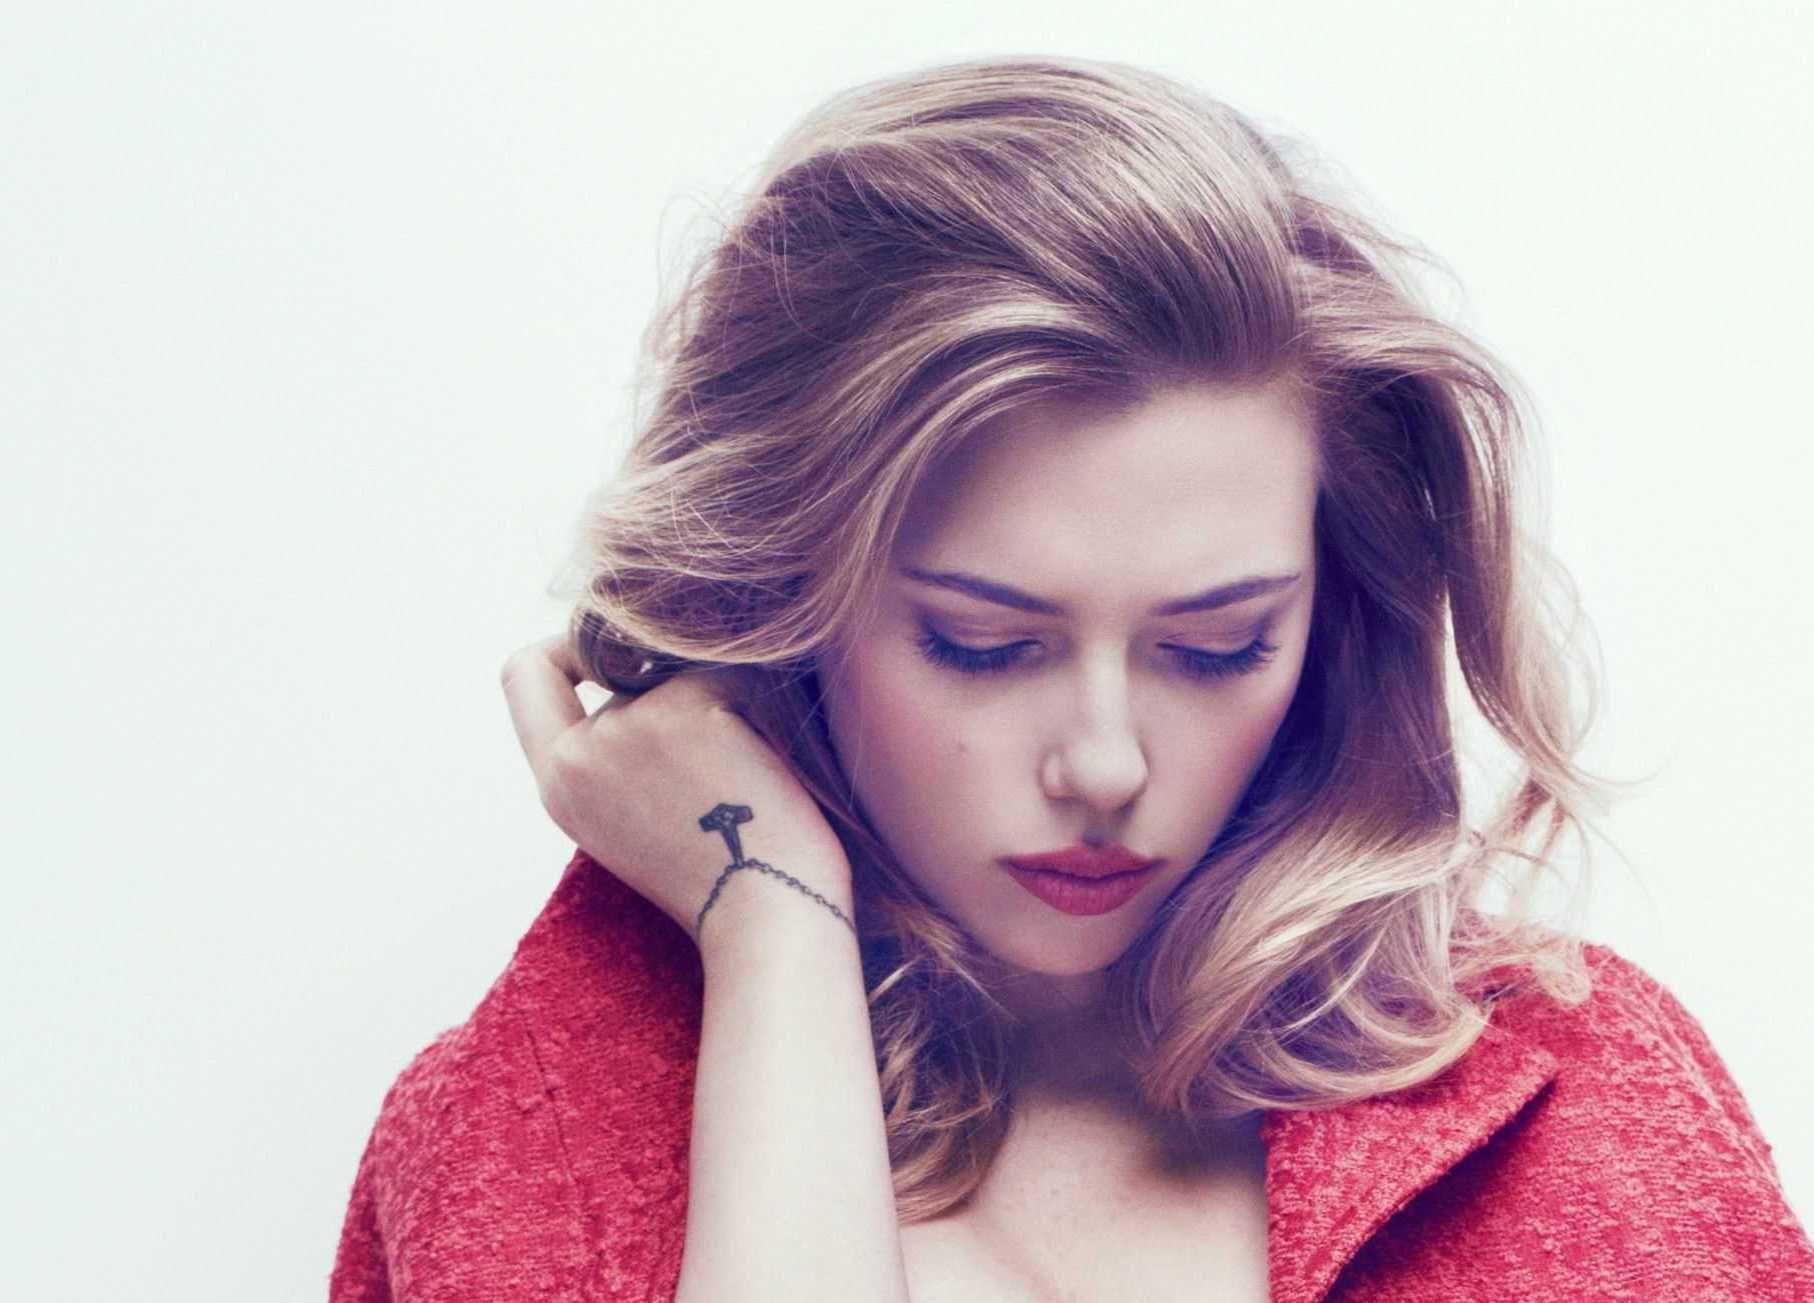 Scarlett Johansson Hd Wallpapers Wallpaper Cave